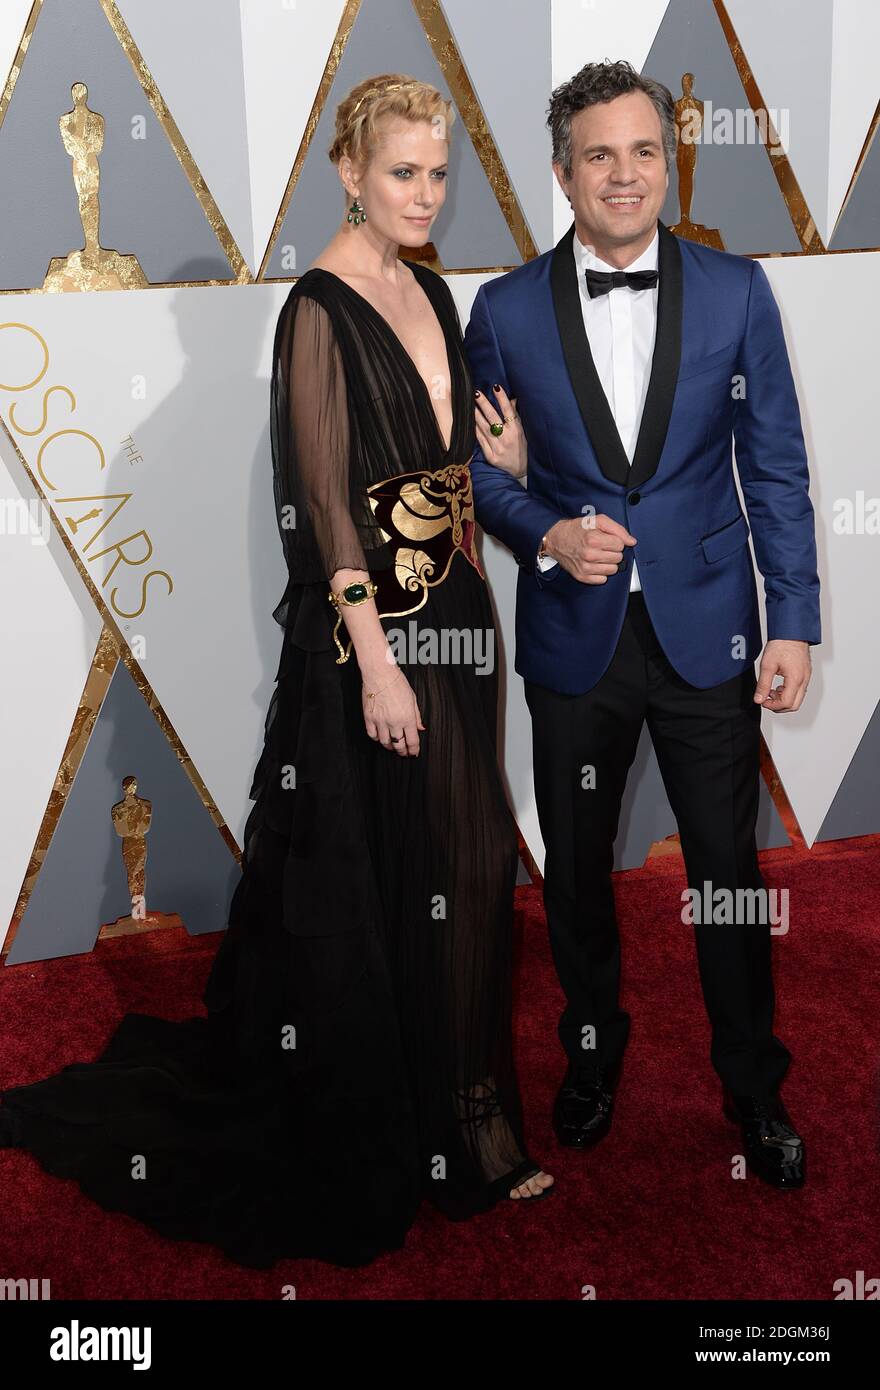 Sunrise Coigney und Mark Ruffalo bei der 88. Academy Awards im Dolby Theater in Hollywood, Los Angeles, CA, USA, 28. Februar 2016. Stockfoto